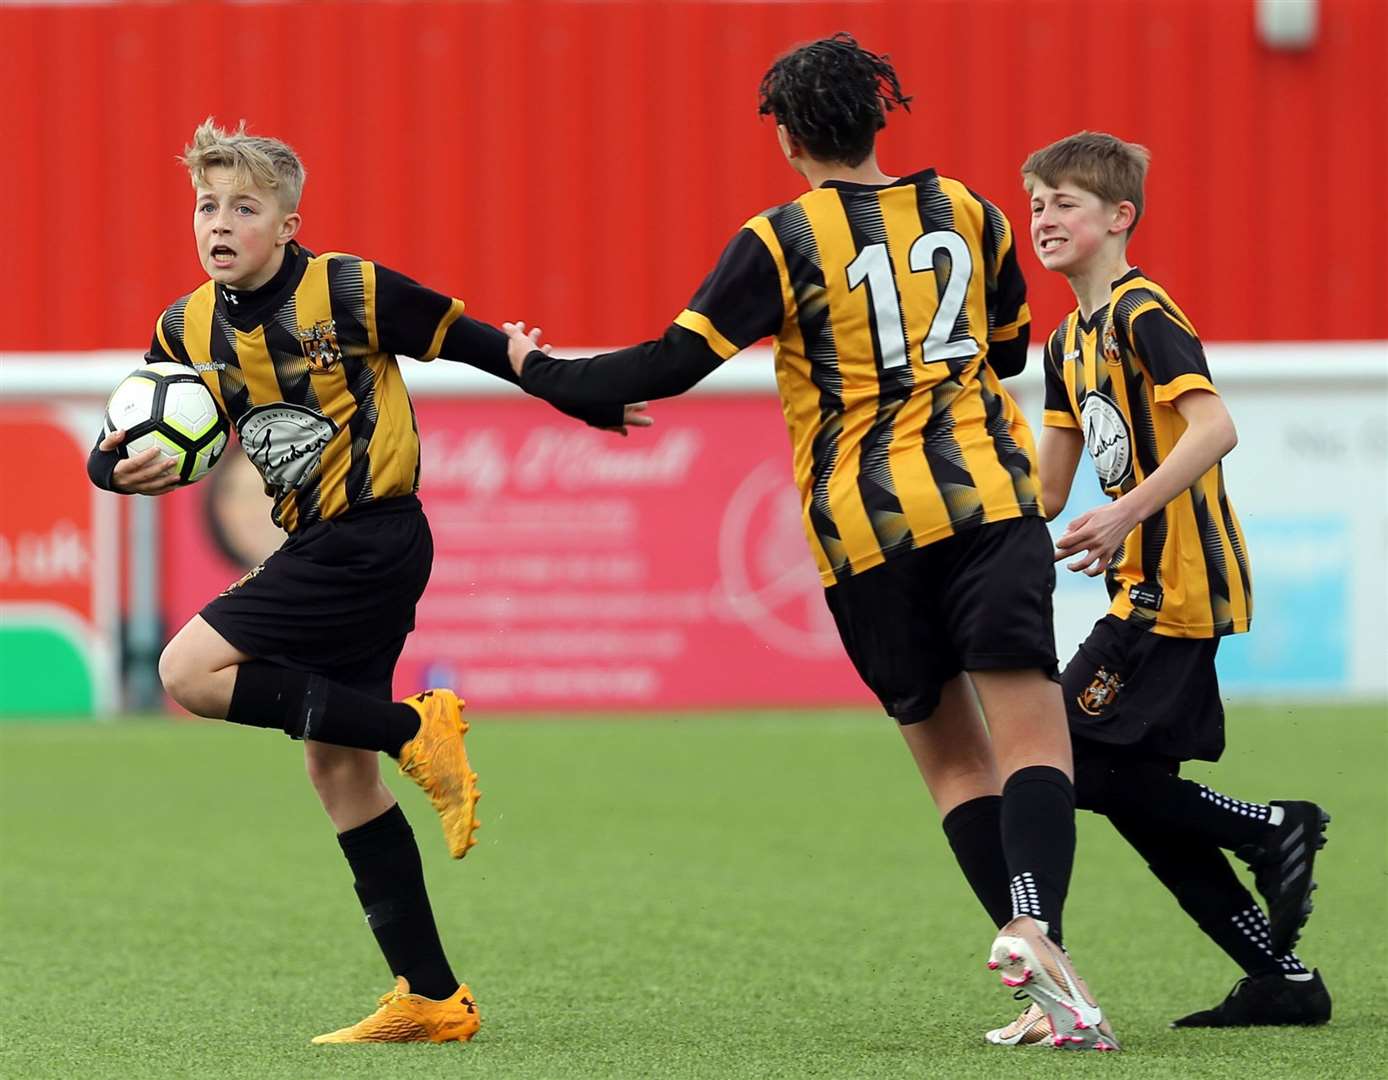 Beau Morgan celebrates scoring for Folkestone Invicta under-13s on Sunday. Picture: PSP Images